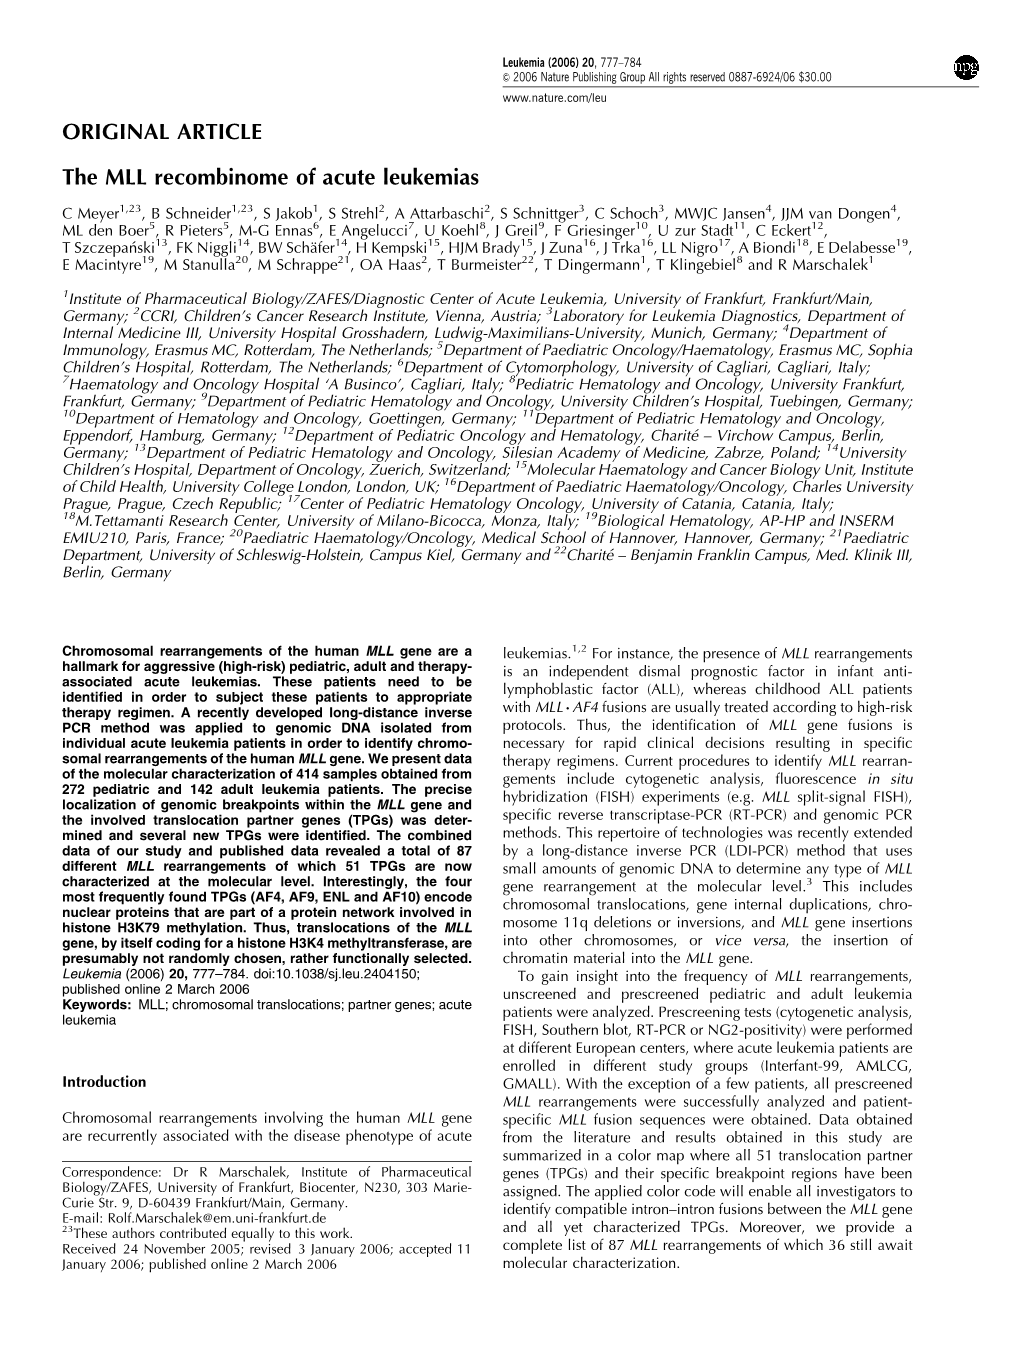 ORIGINAL ARTICLE the MLL Recombinome of Acute Leukemias